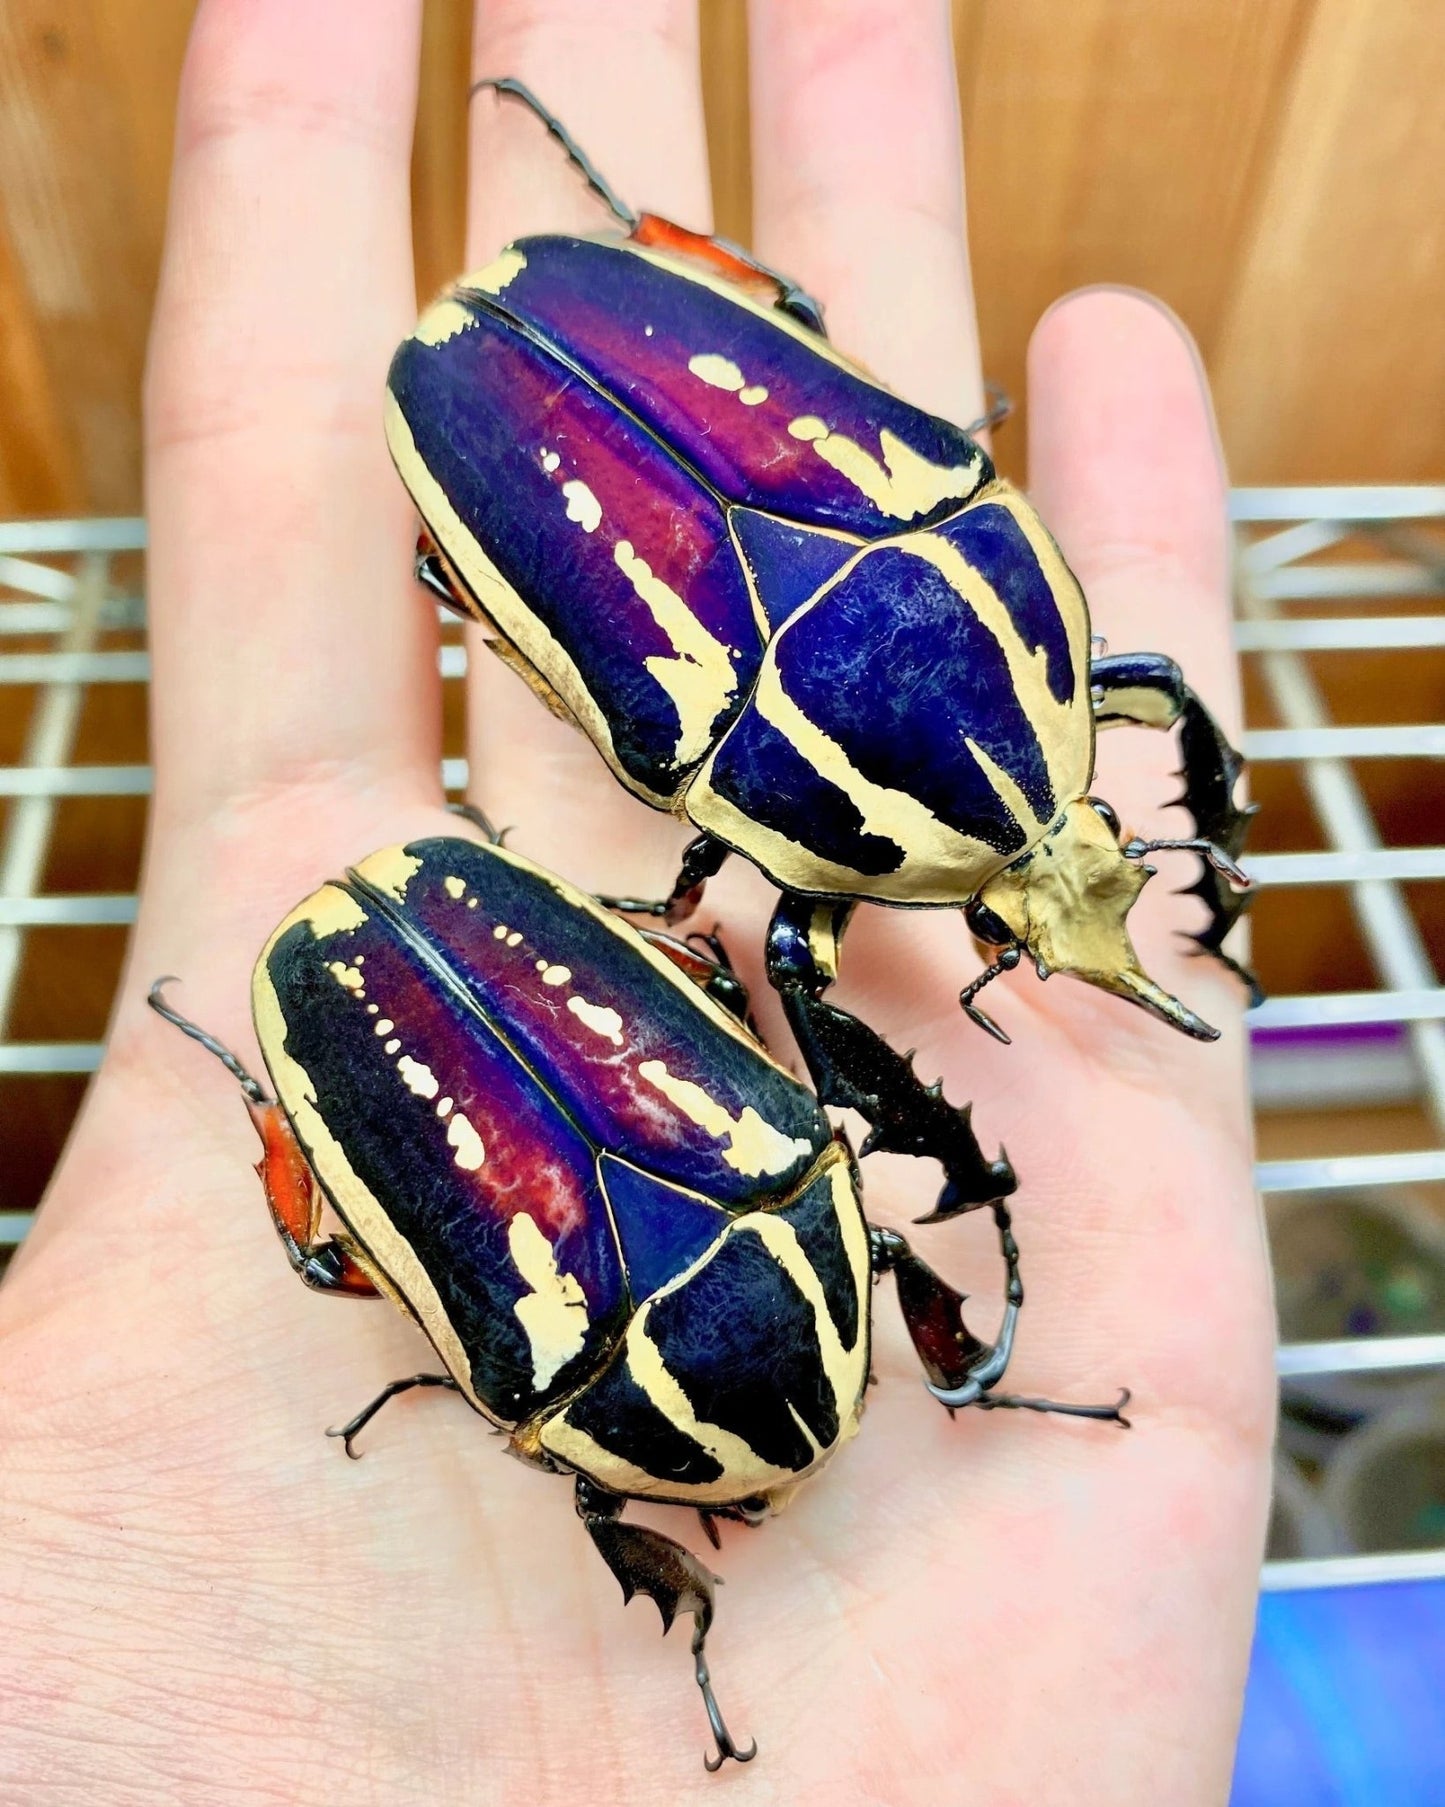 ⨂ ADULTS - "Violet" Giant Flower Beetle, (Mecynorrhina ugandensis) - Richard’s Inverts